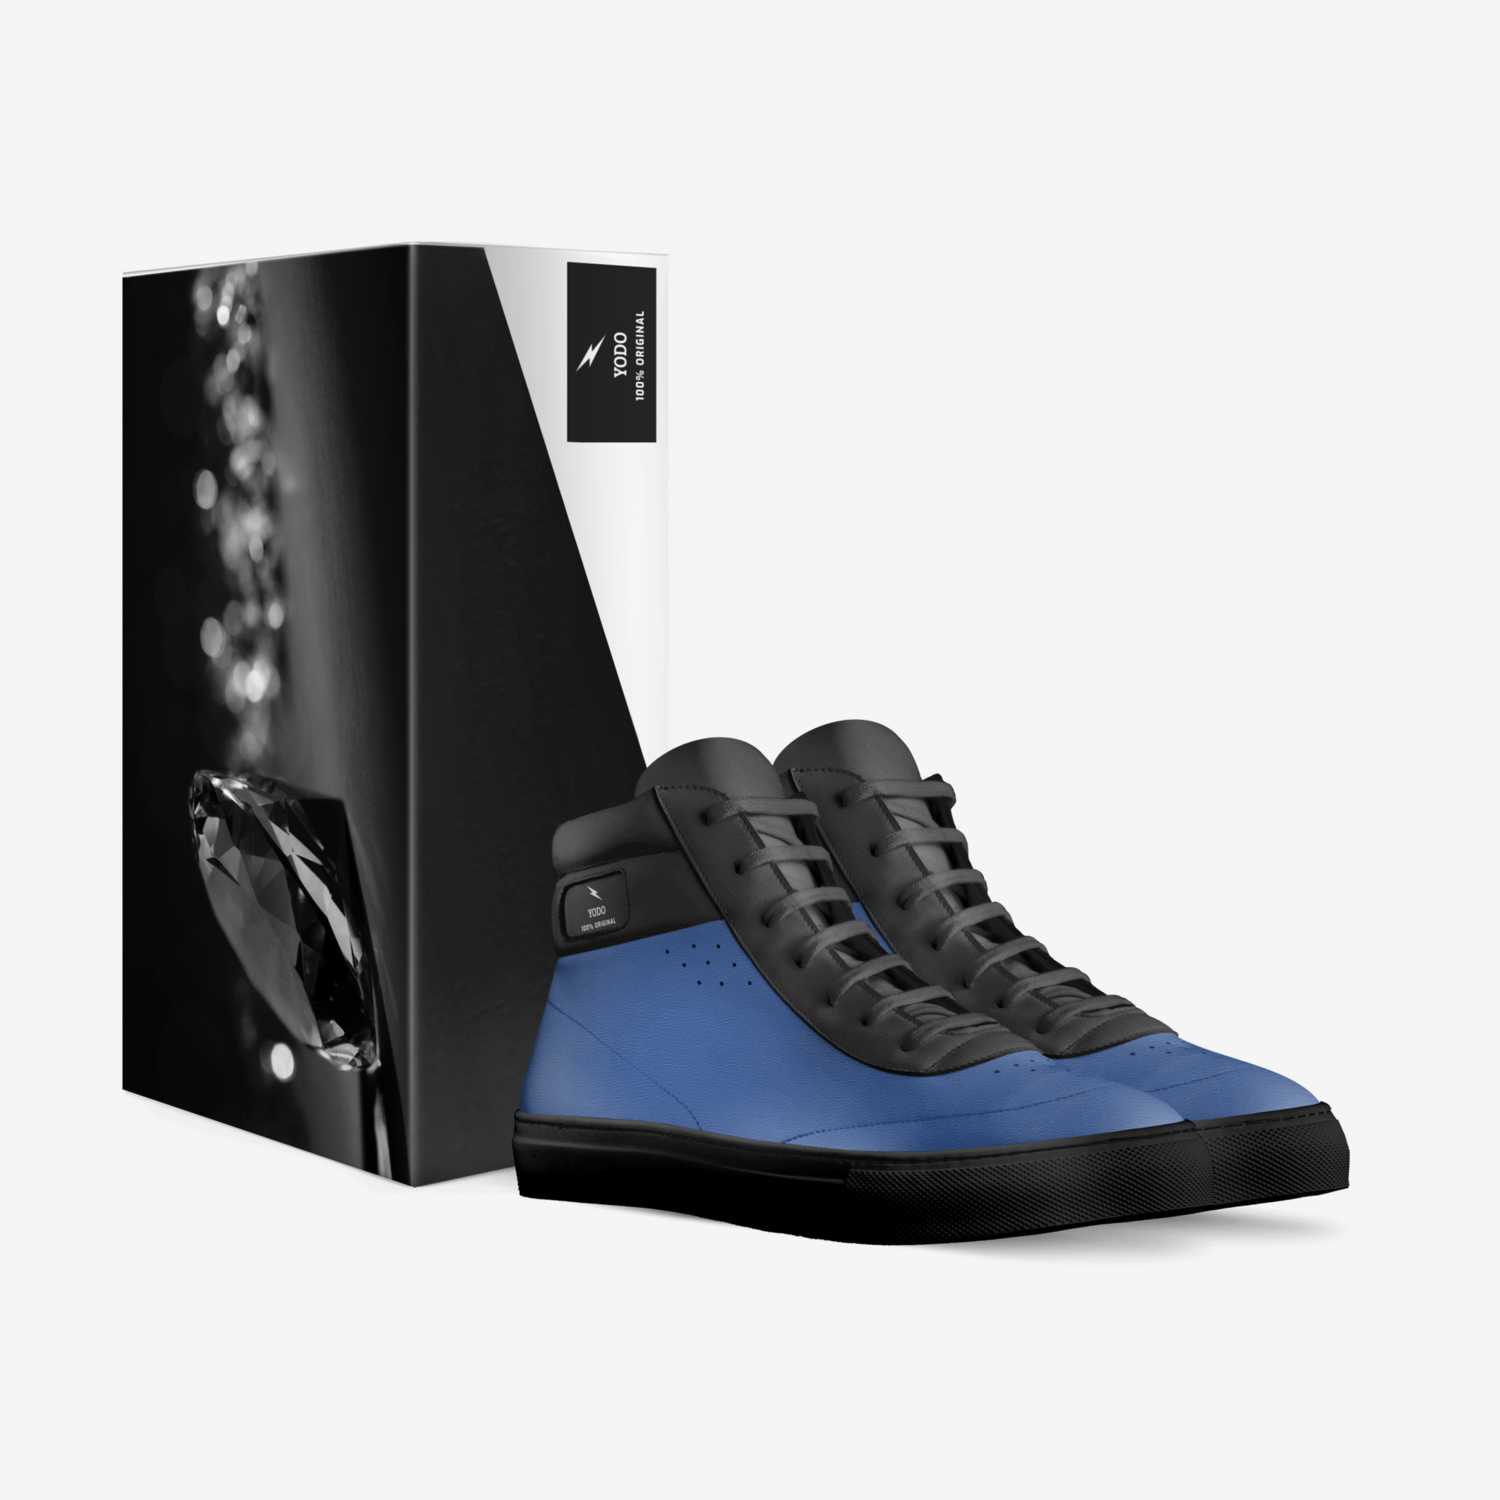 YODO custom made in Italy shoes by Bradley Lubin | Box view